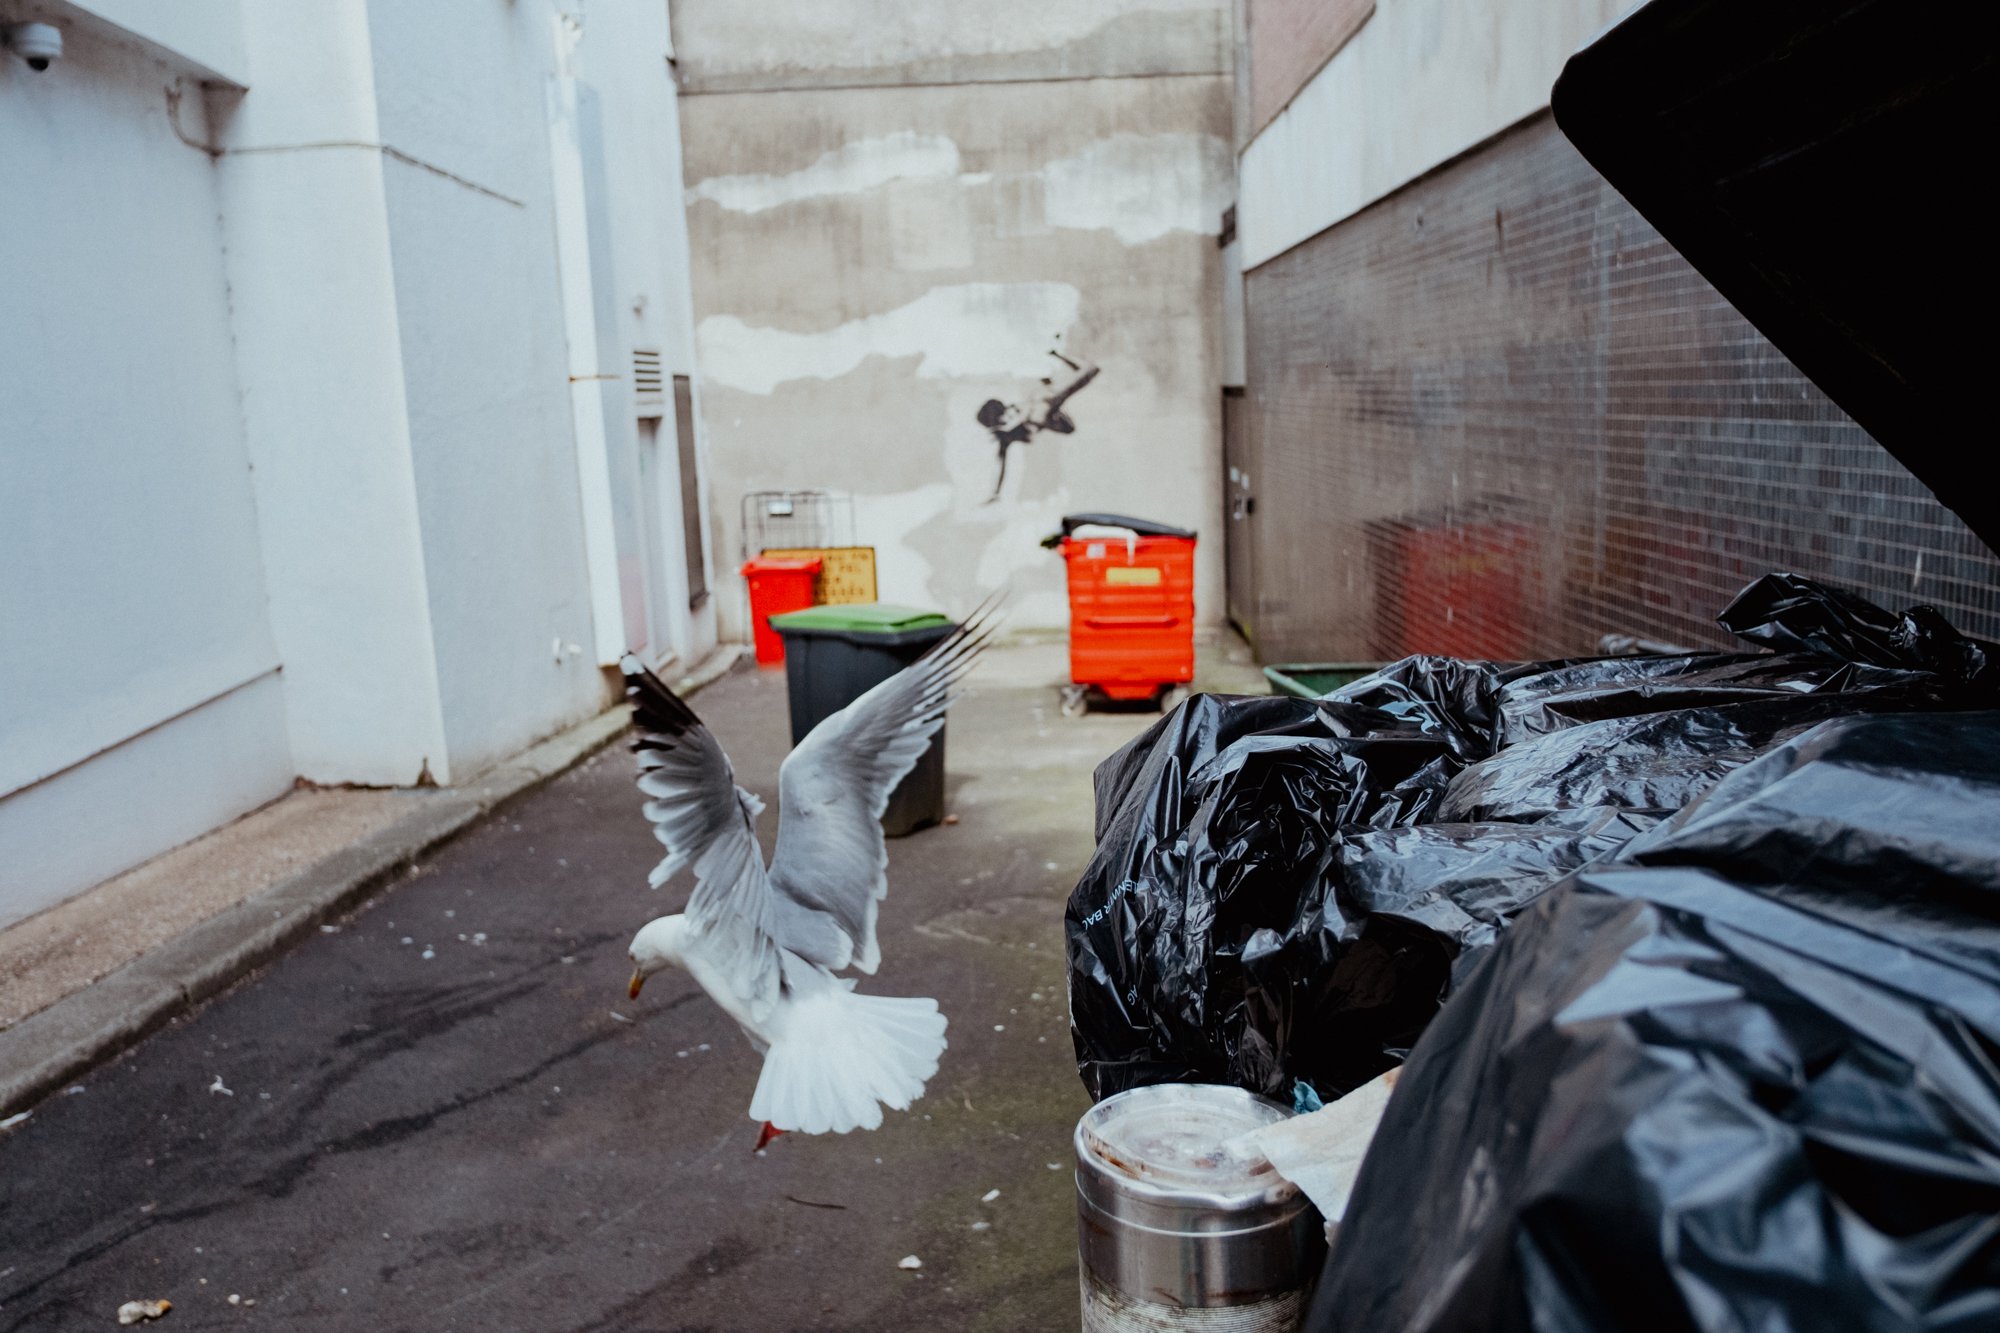 swansea-seagull-bins-falling-graffiti.jpg